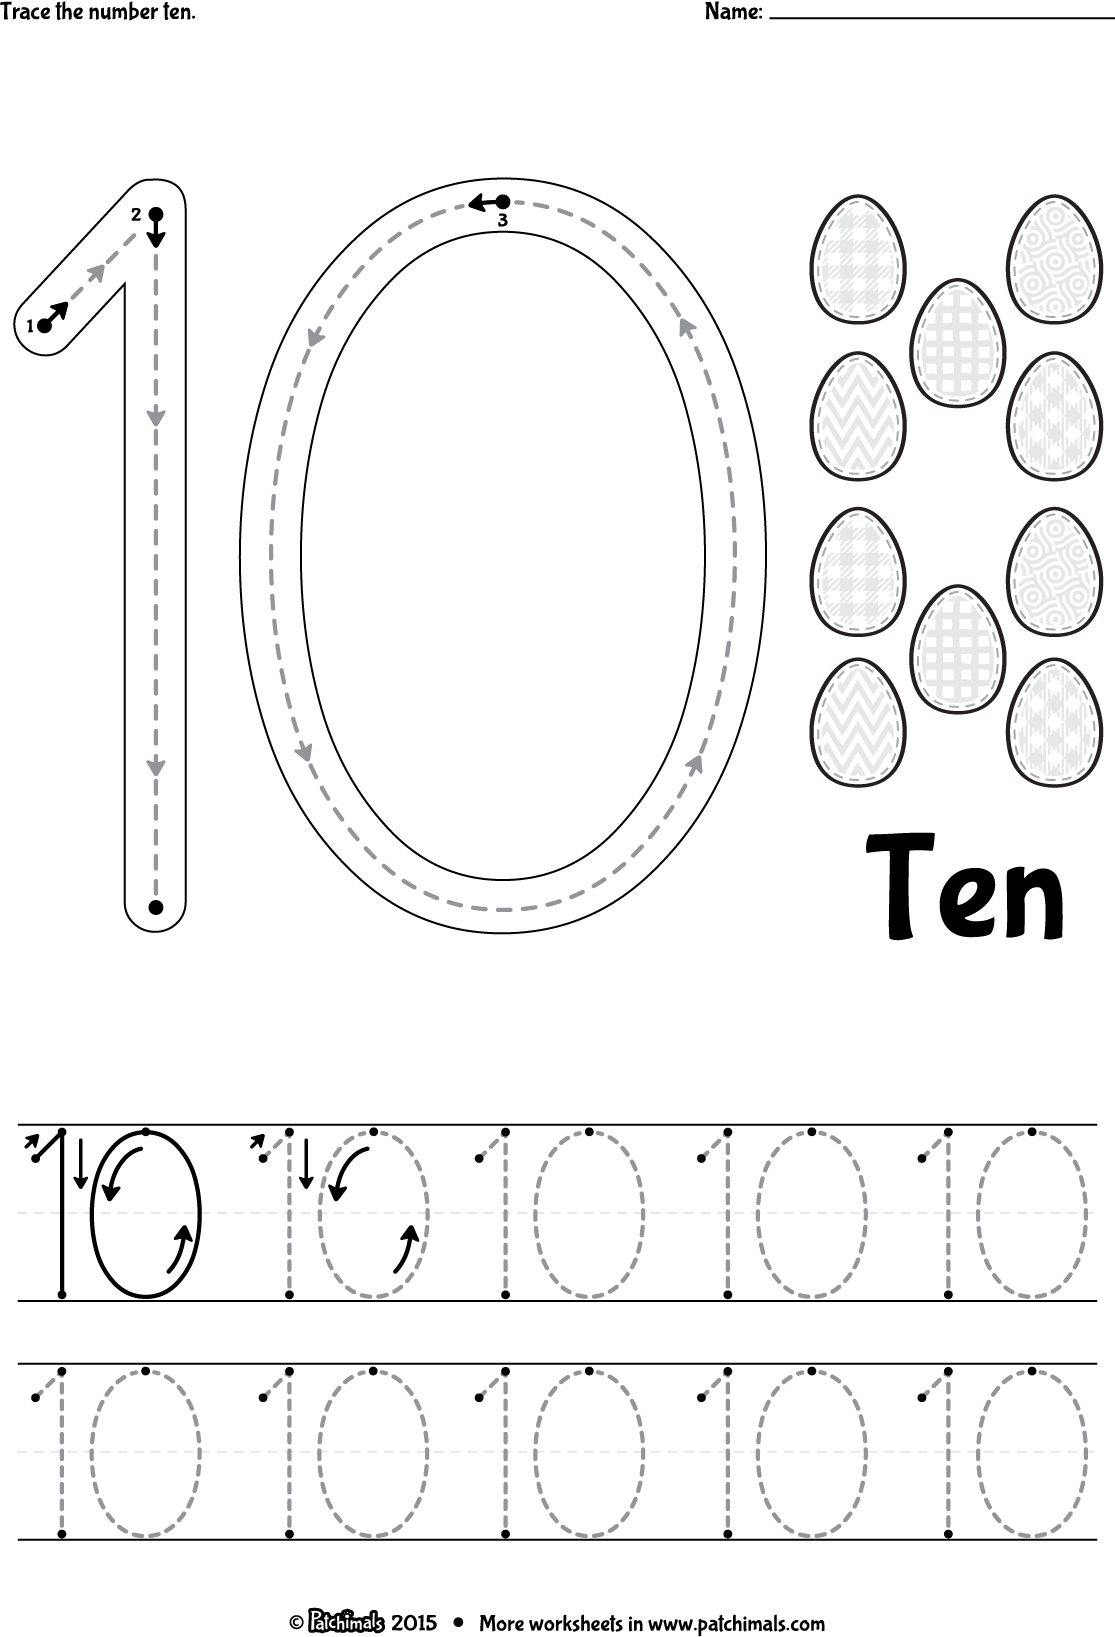 tracing-numbers-10-20-worksheets-printable-tracing-numbers